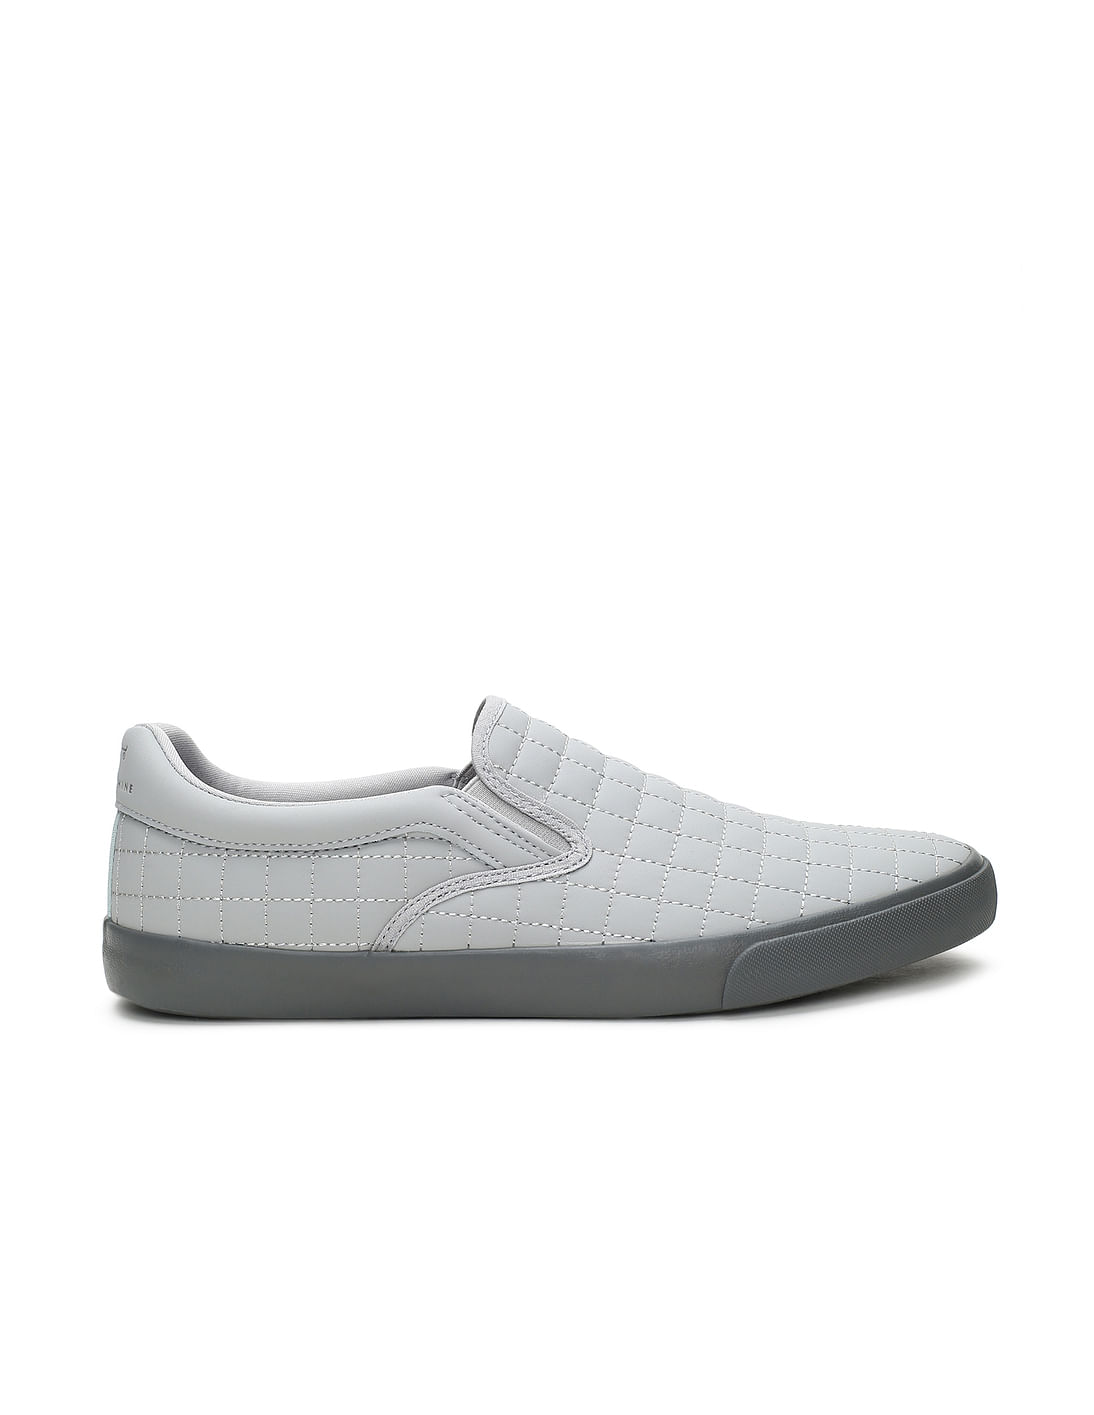 Shop Men Grey Casual Canvas Slip-On Shoes Online